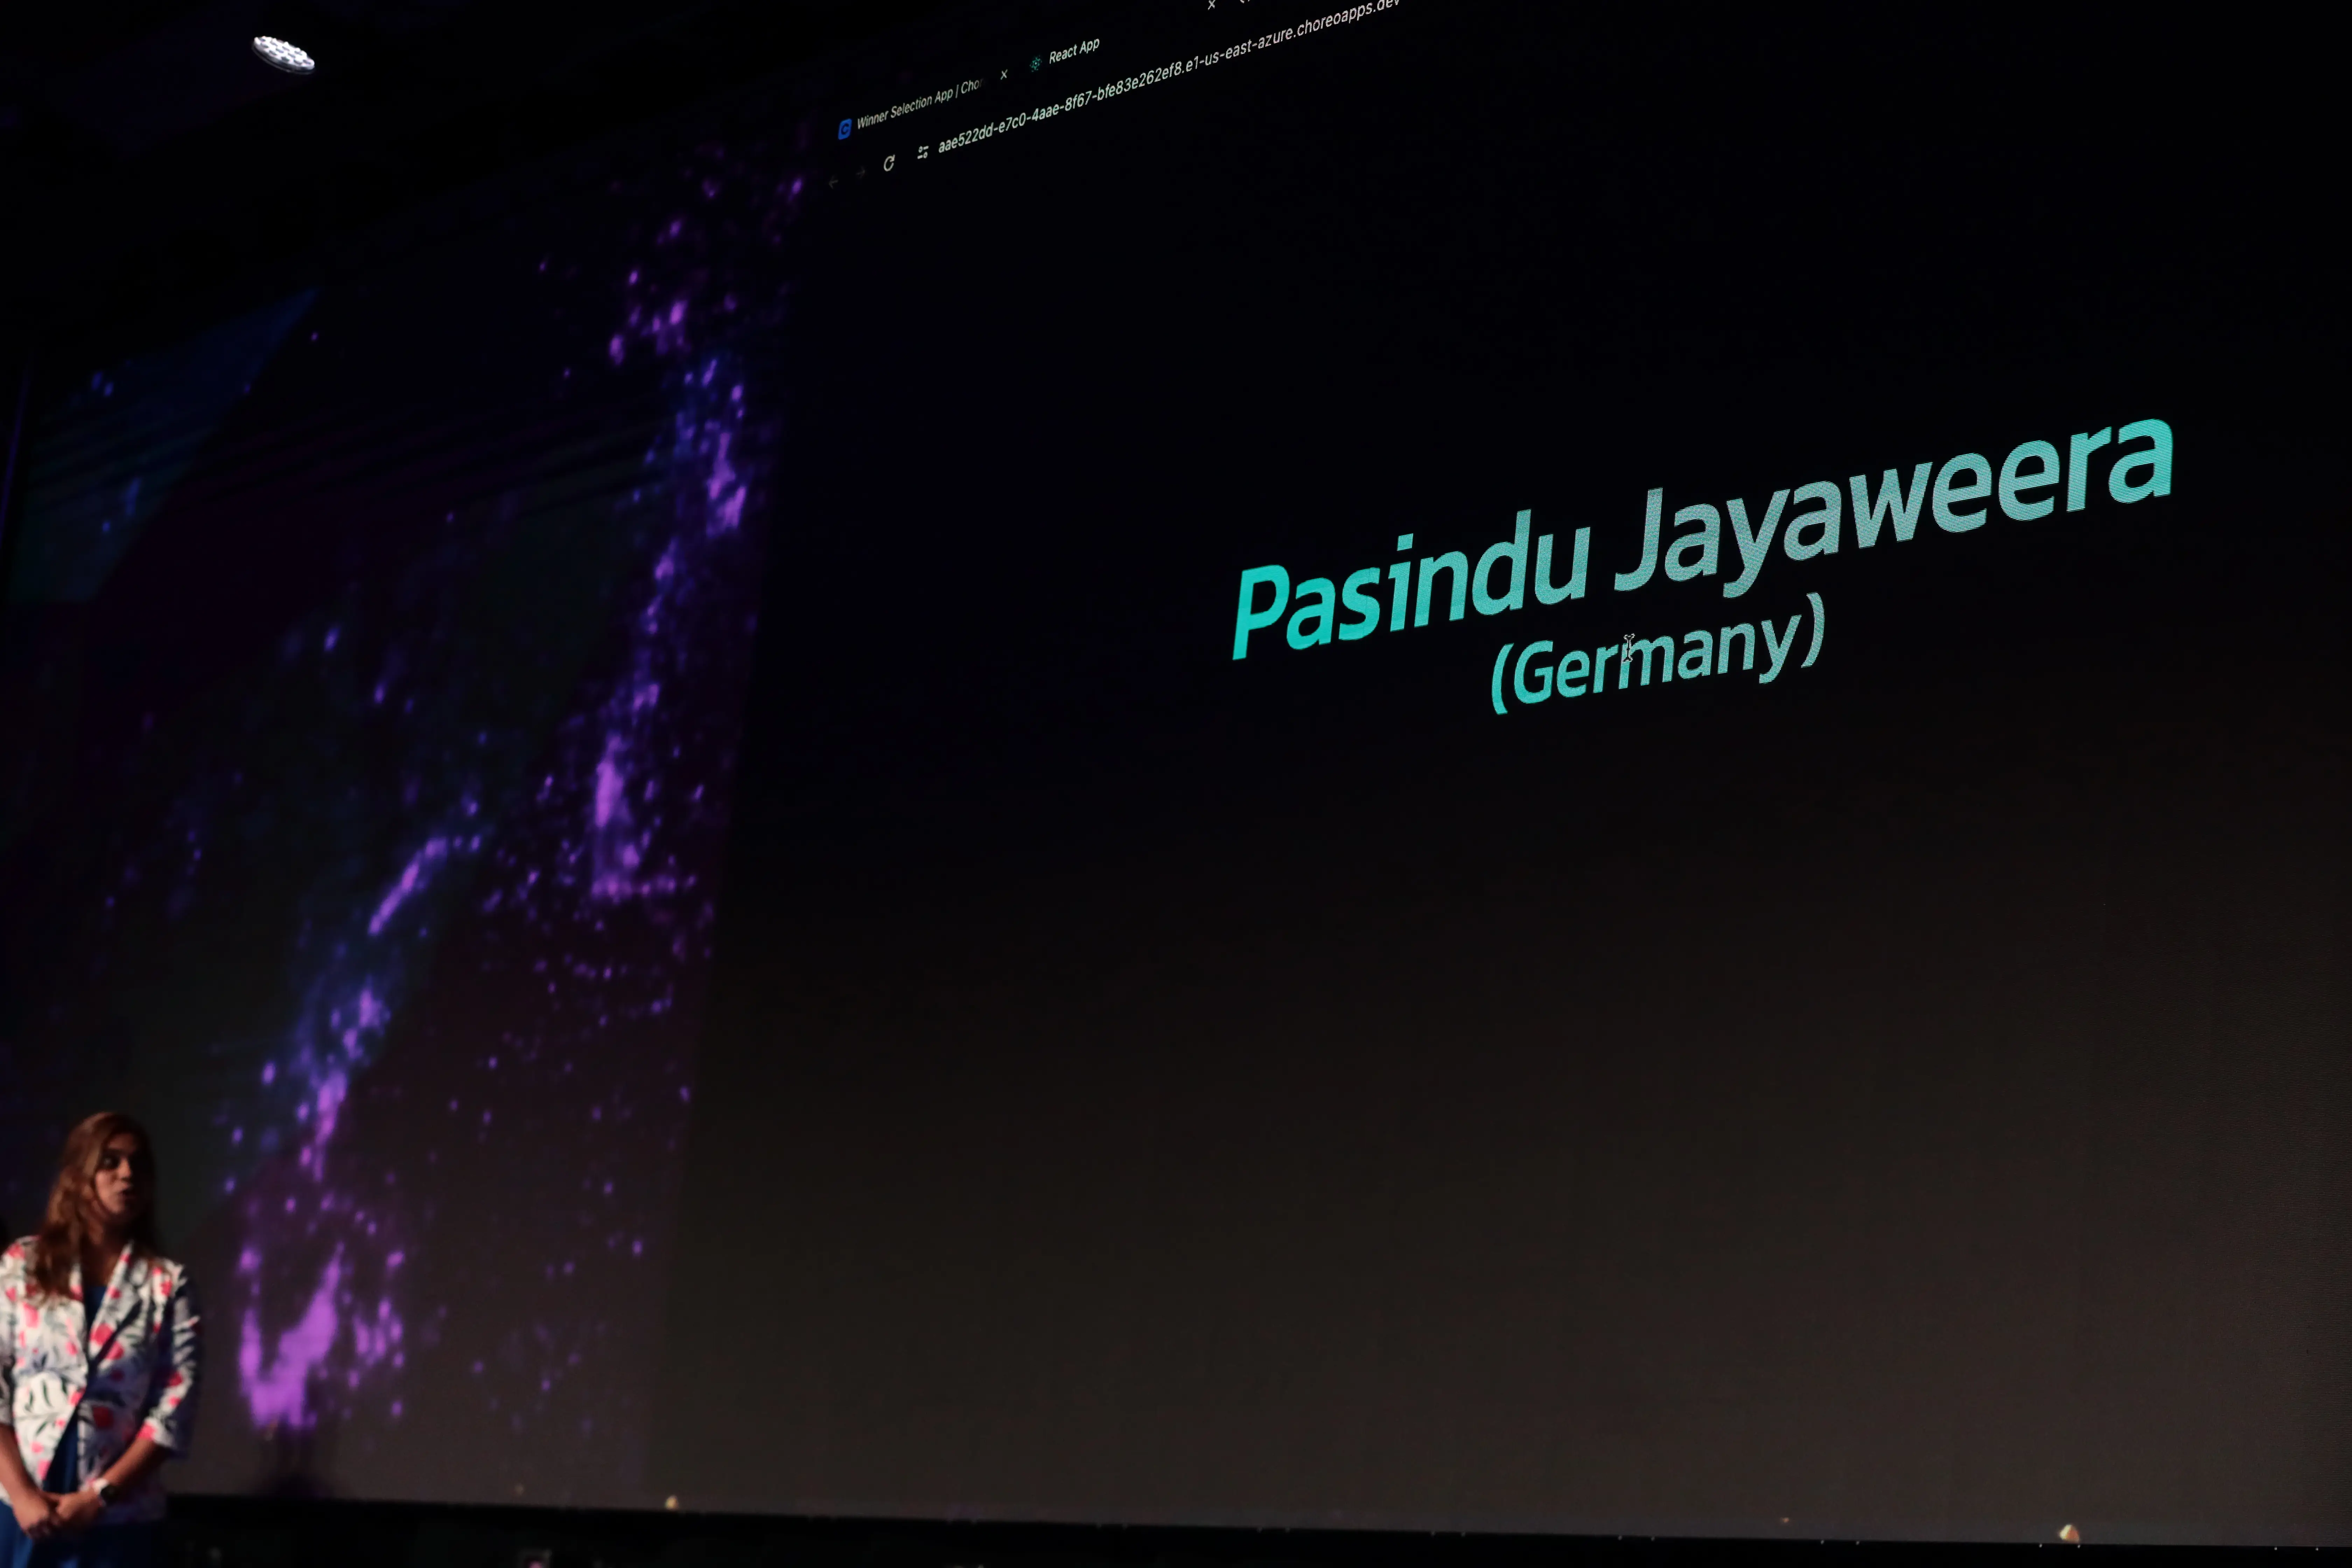 Pasindu Jayaweera, the grand prize winner